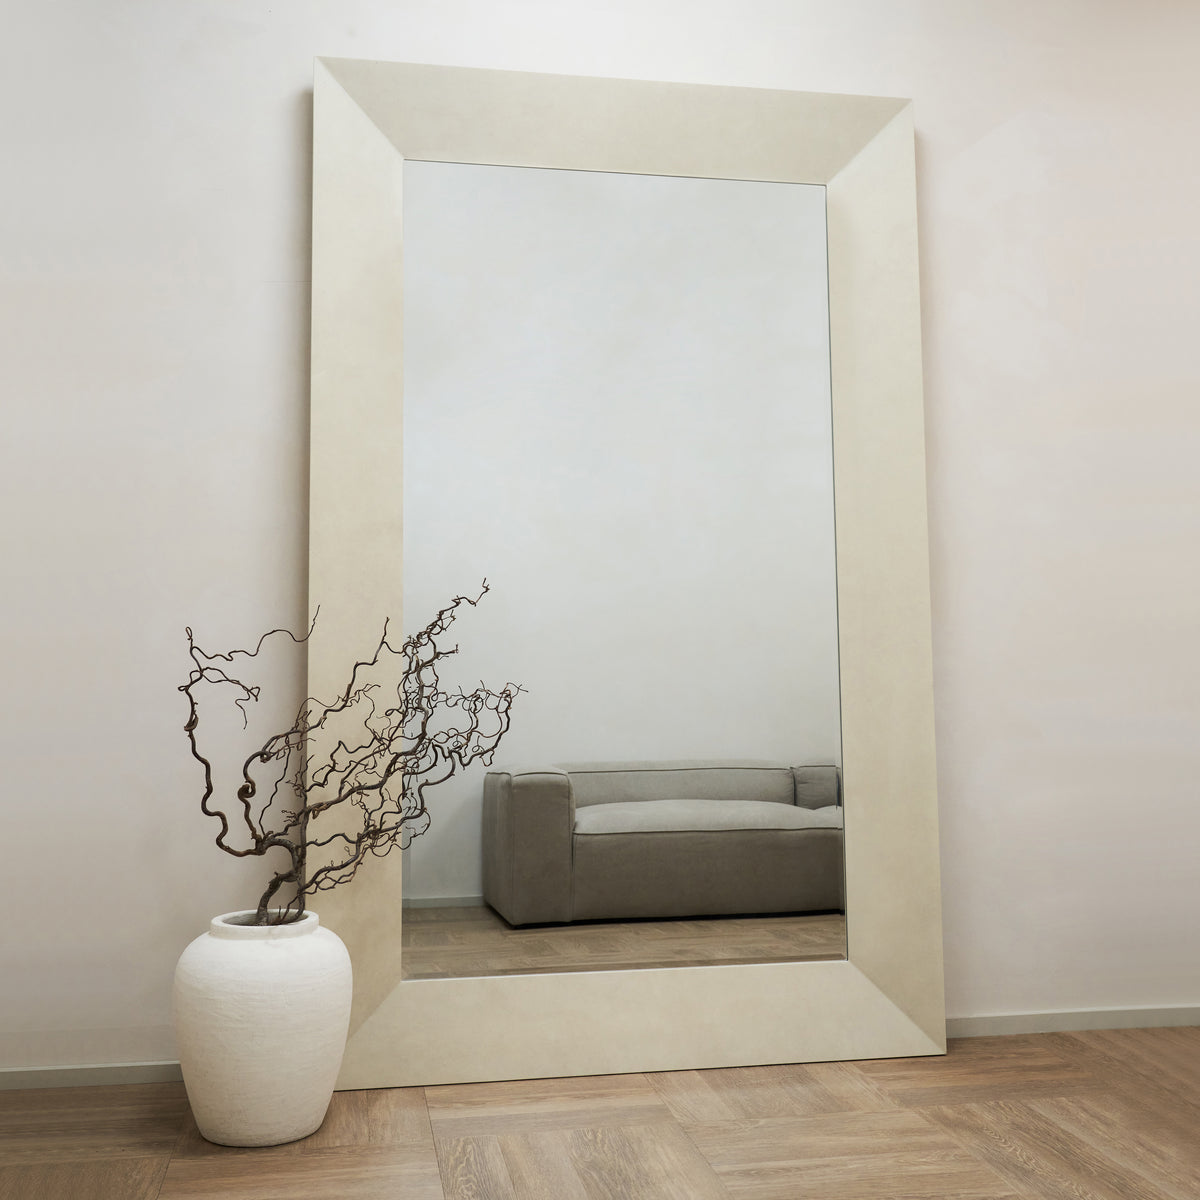 Full length extra large rectangular concrete mirror beside vase